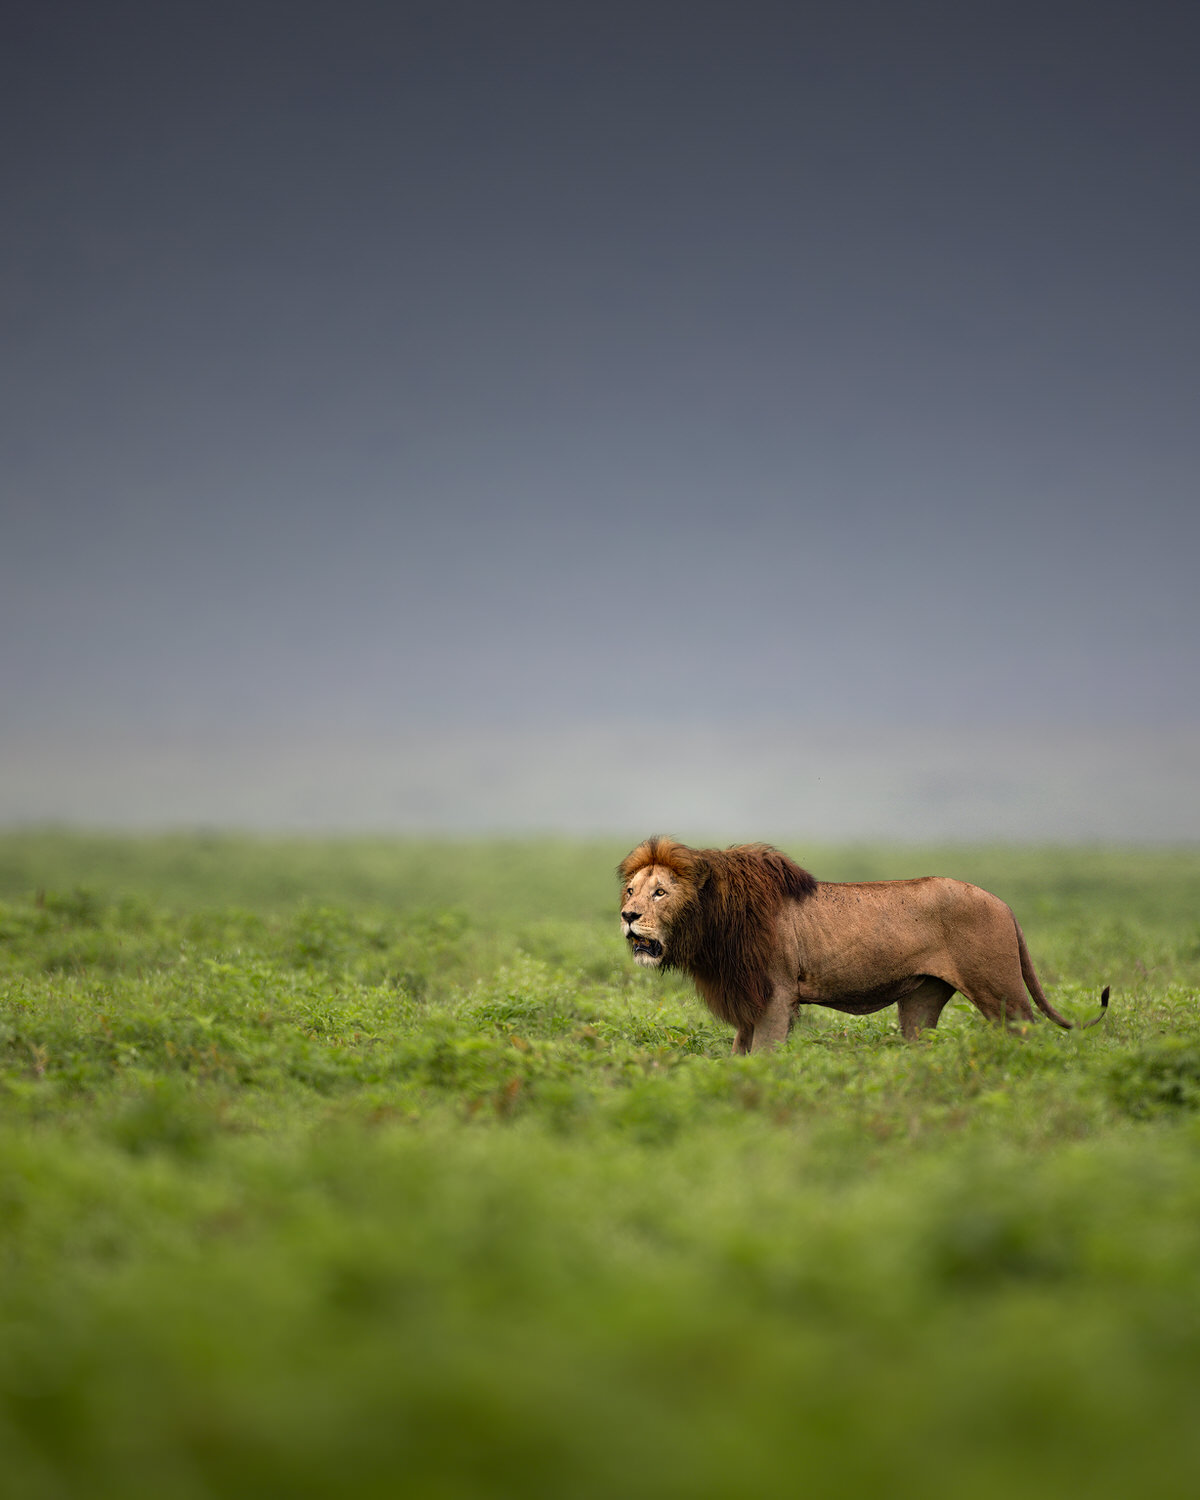 Photographic Safari Tanzania